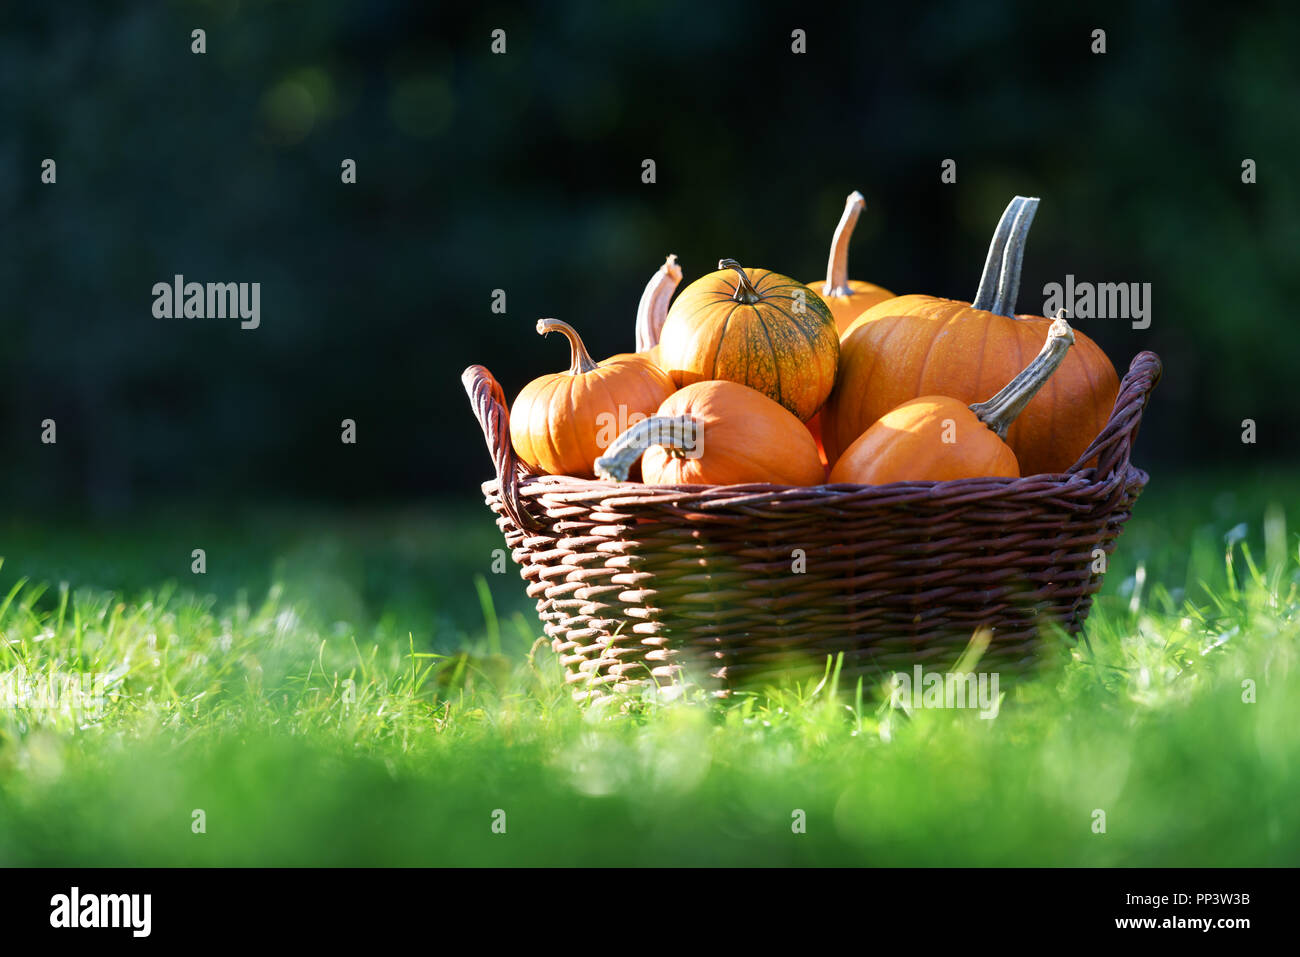 Different kind of pumpkins in garden basket. Halloween and autumn background Stock Photo